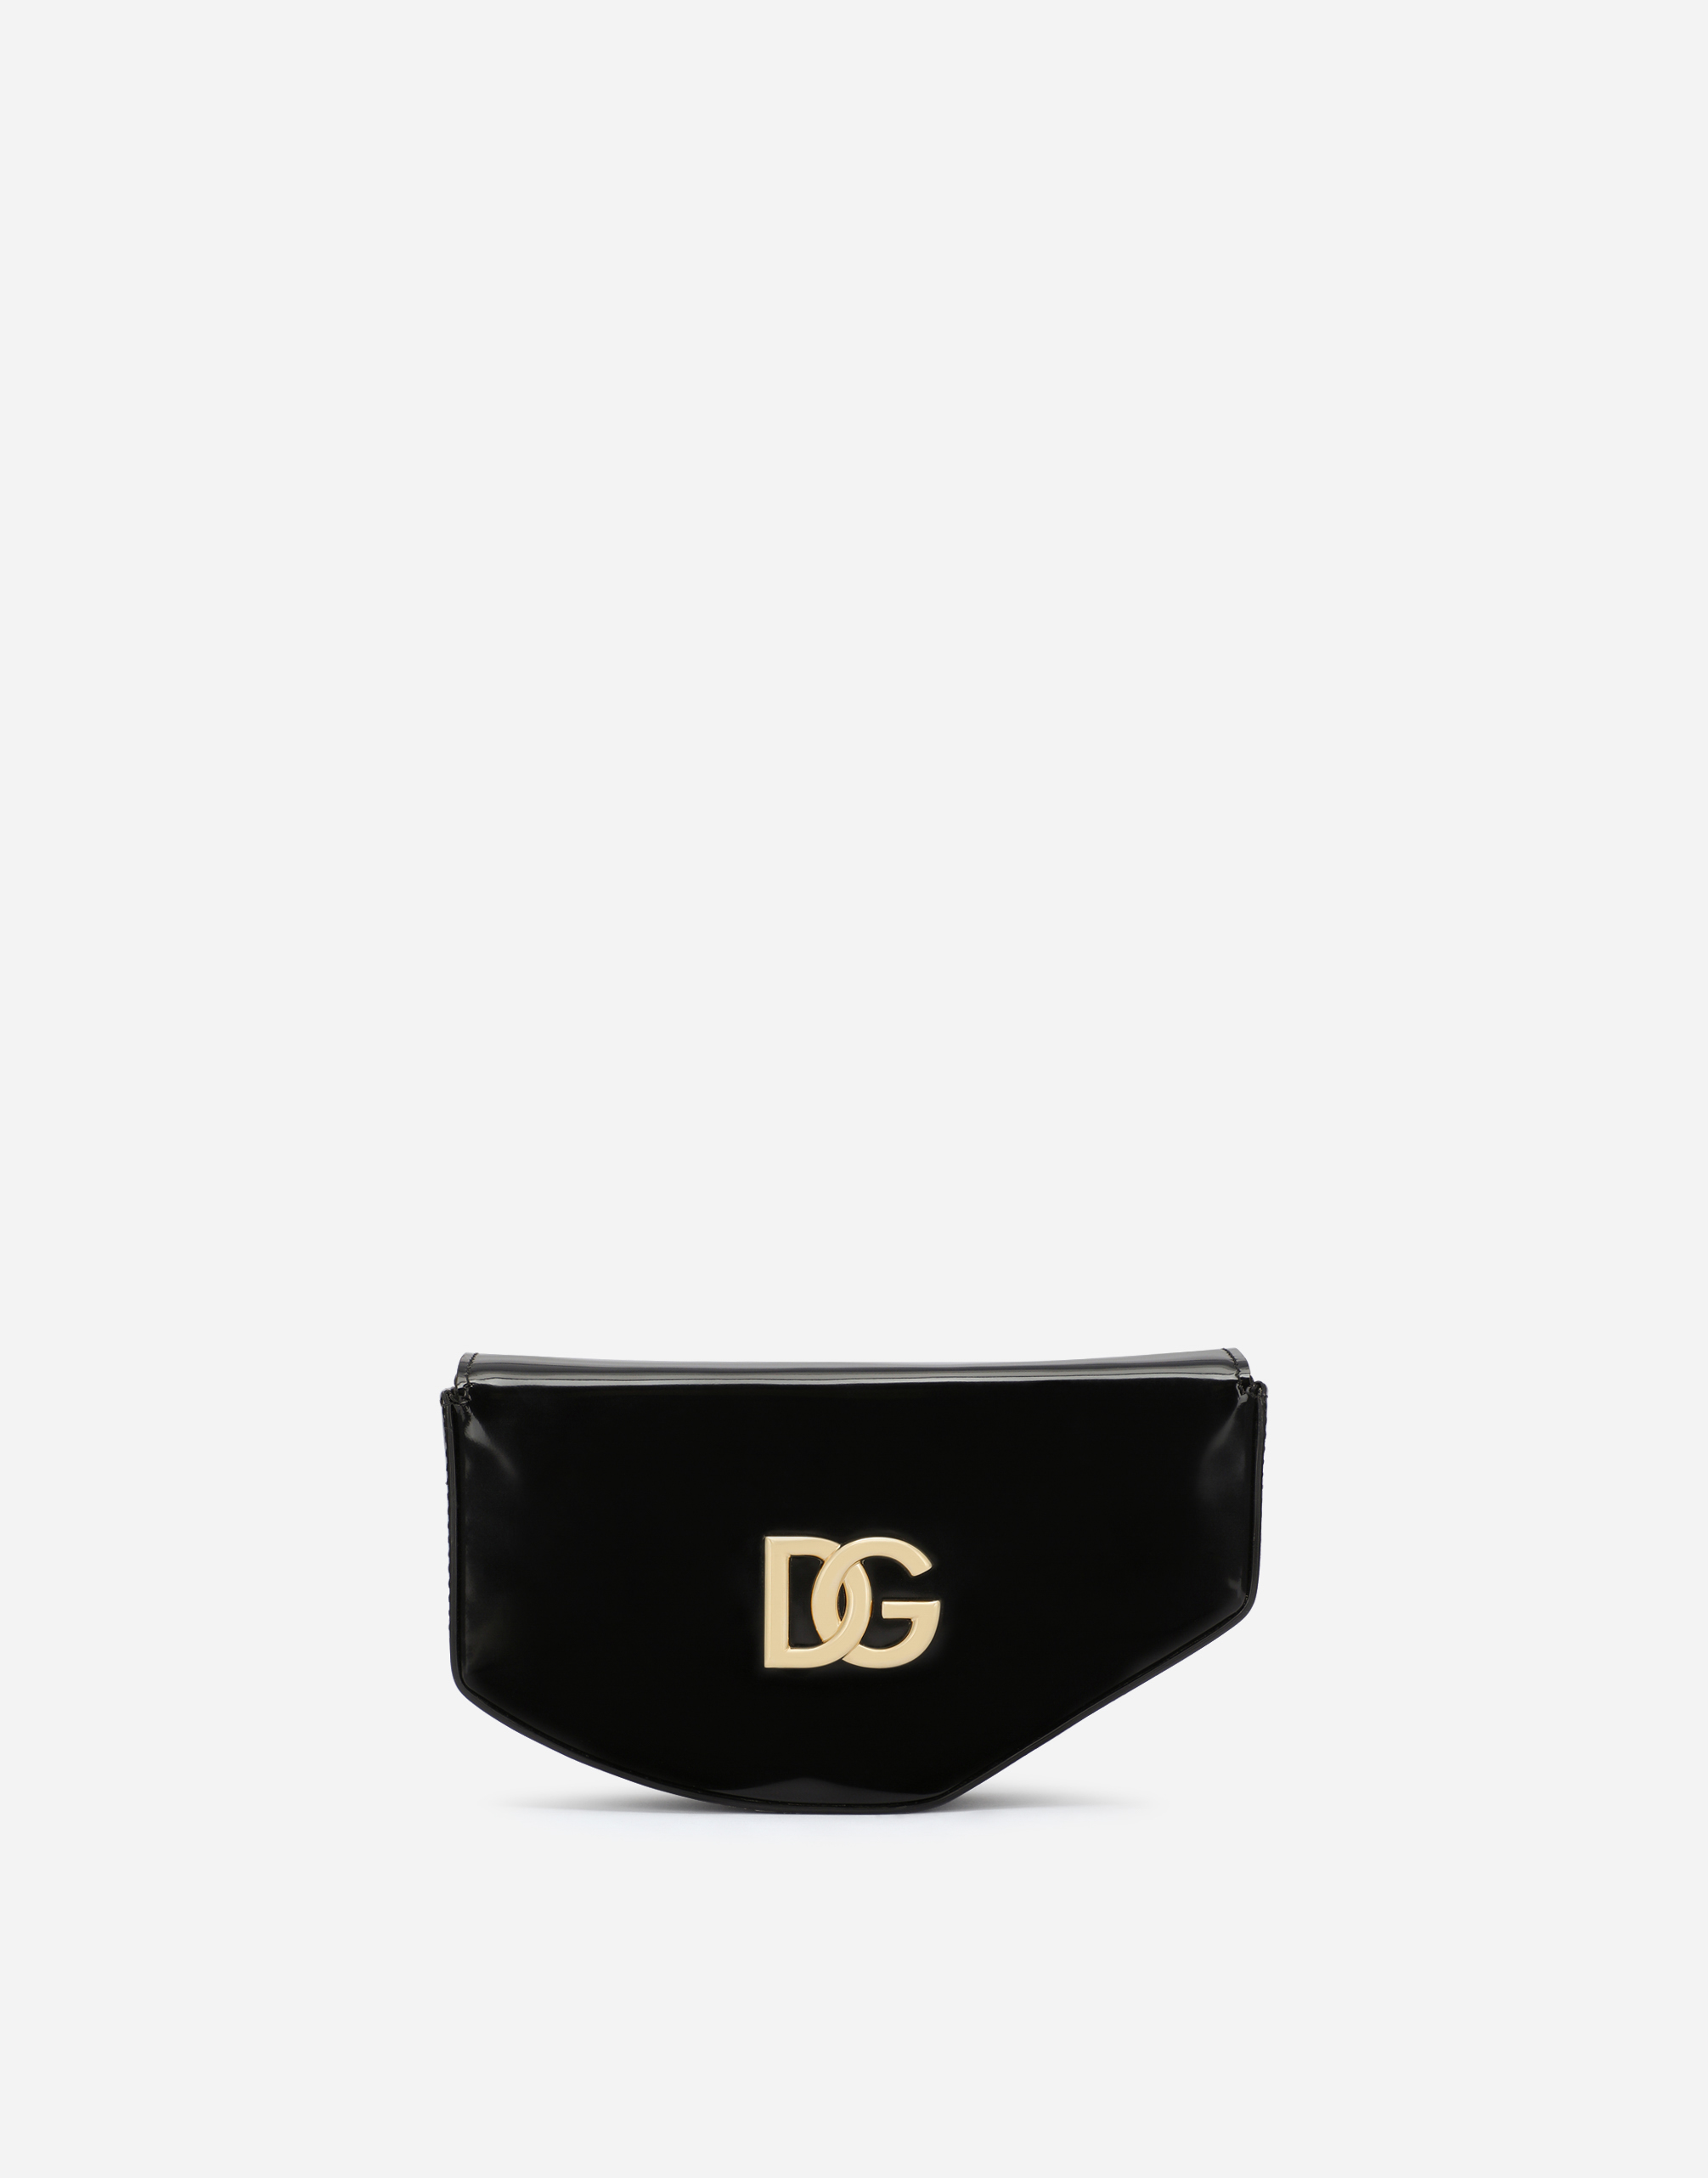 Polished calfskin moon bag with DG logo in Black